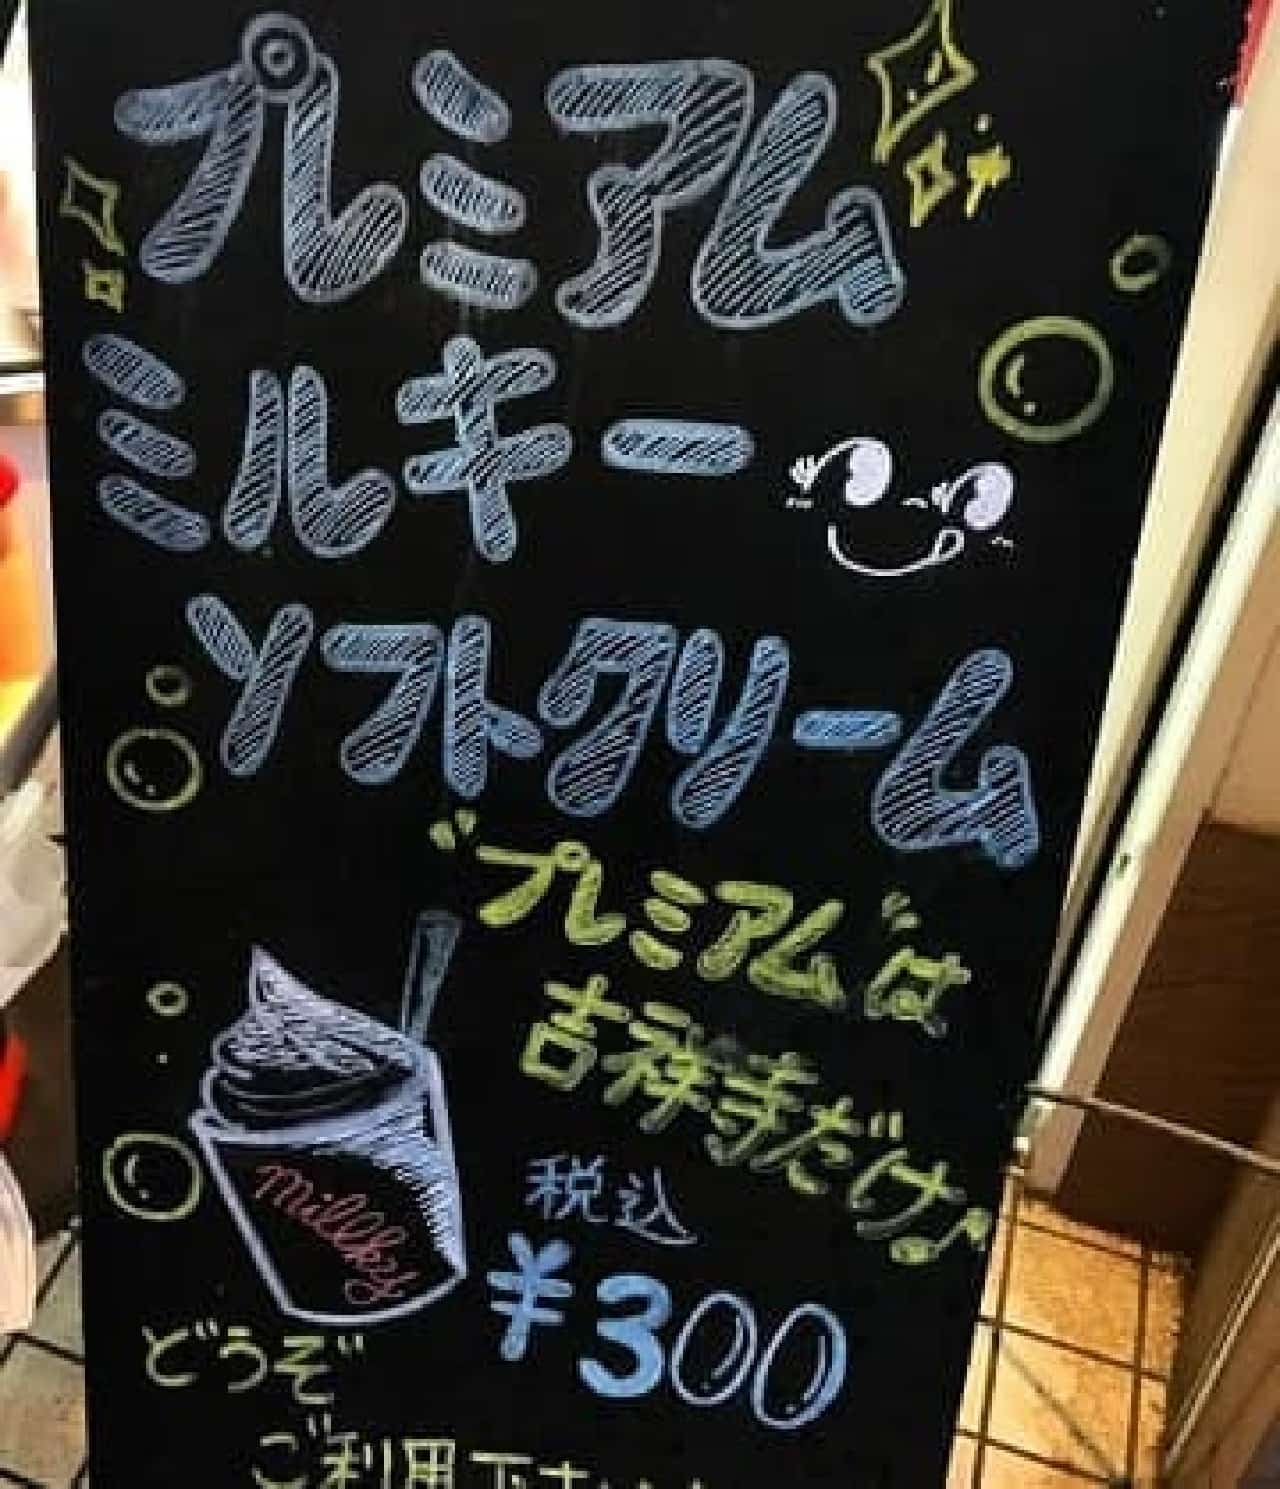 Premium milky soft serve ice cream sign